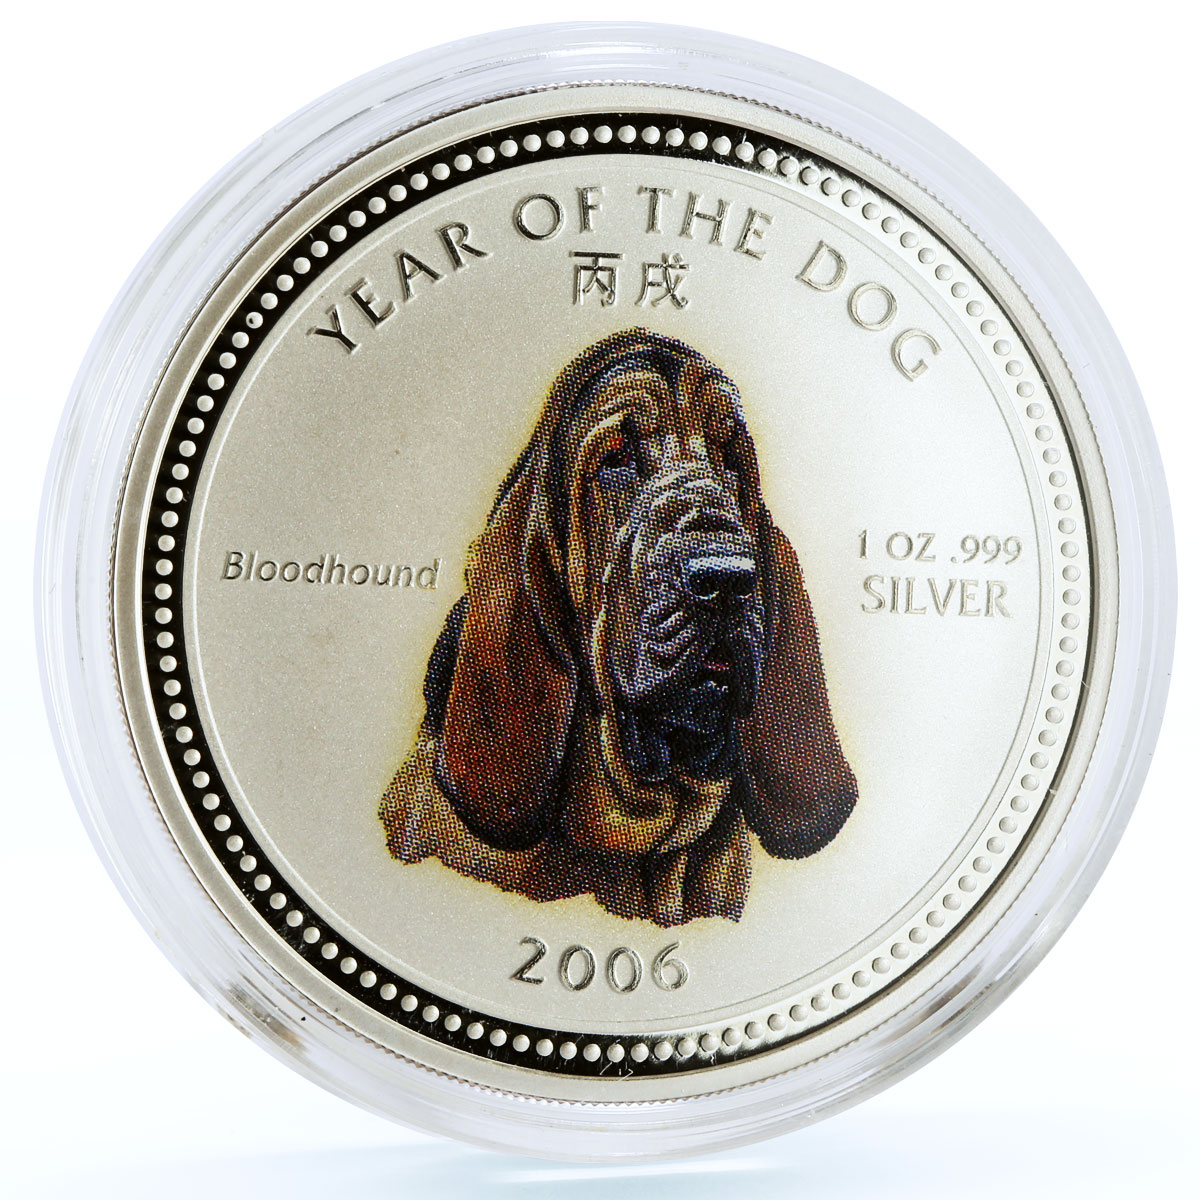 Cambodia 3000 riels Lunar Calendar Year of the Dog Bloodhound silver coin 2006